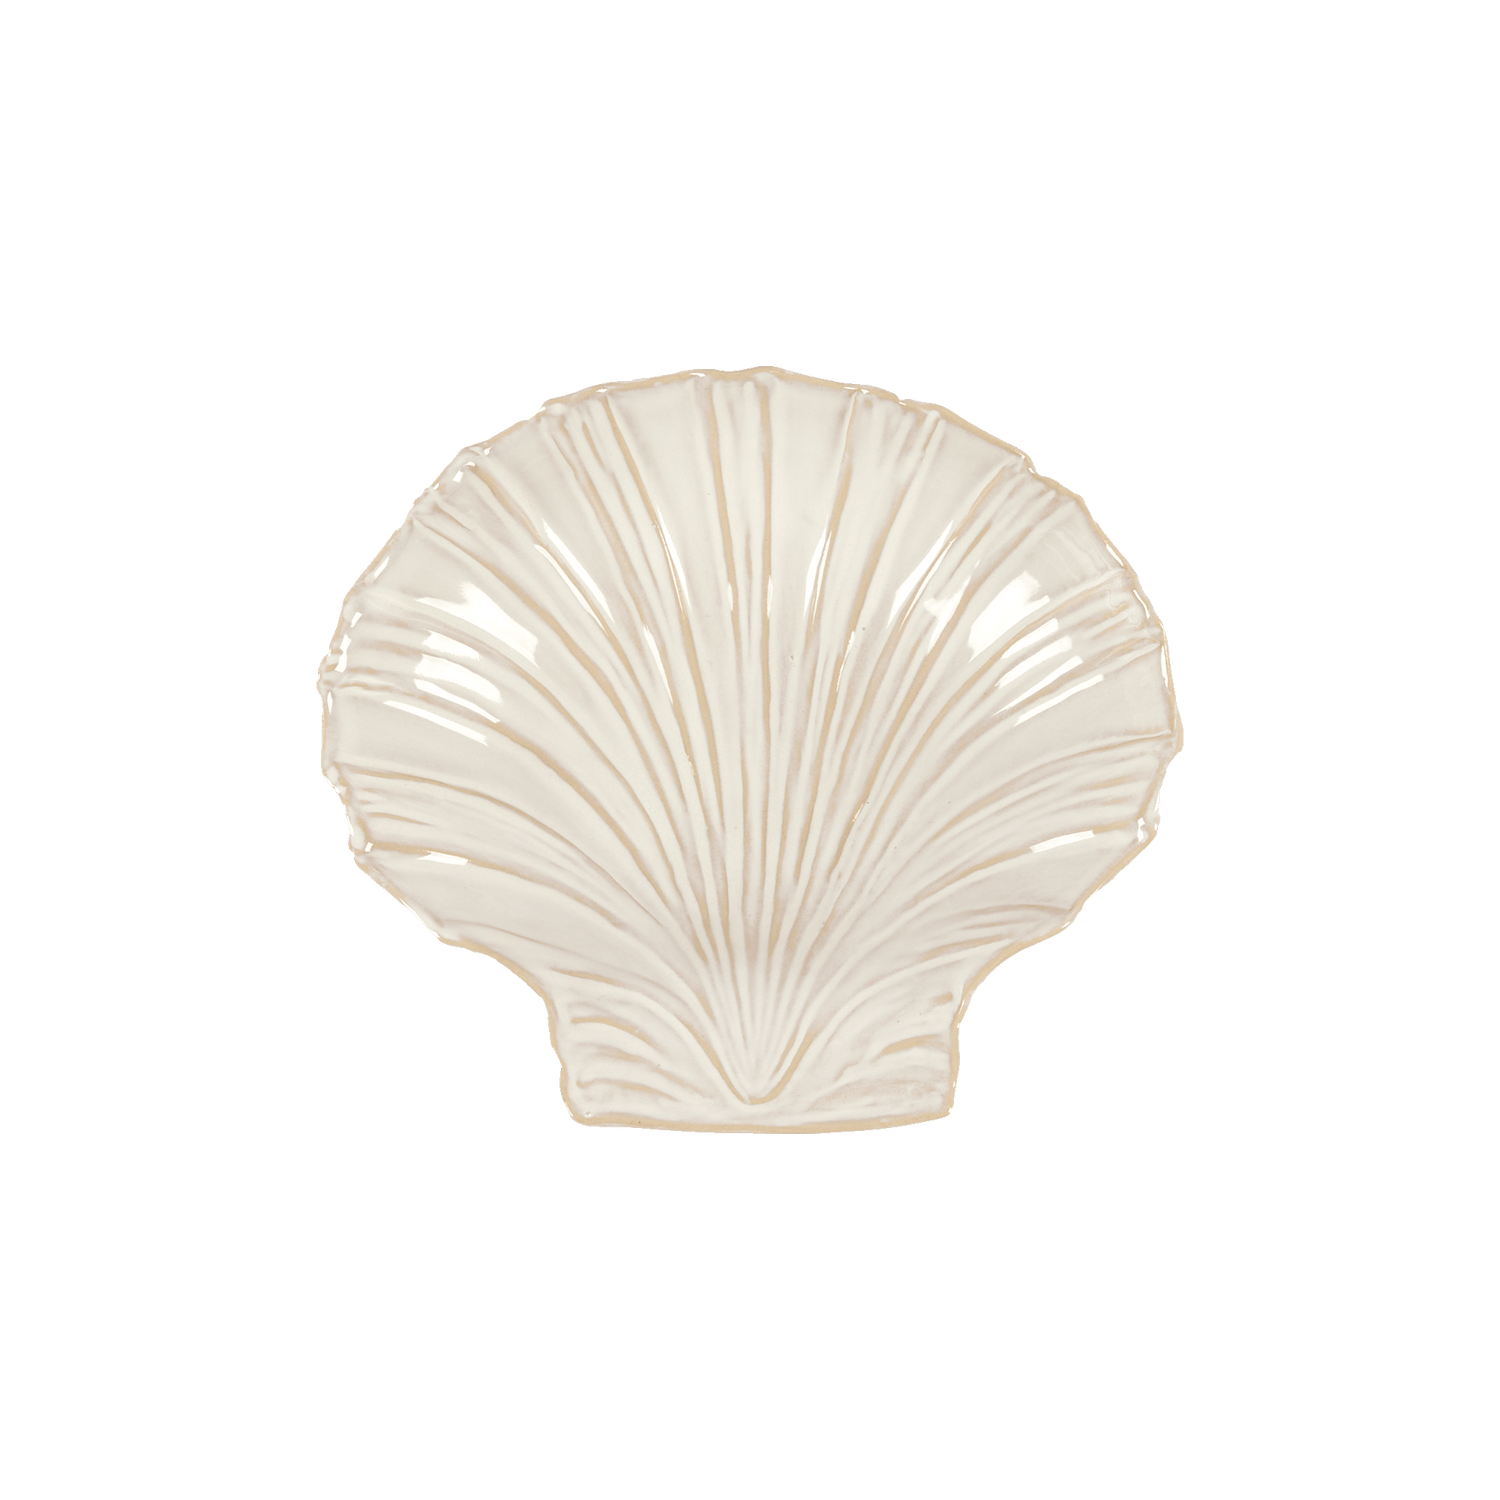 Shell small bowl - Offwhite 20x18 cm